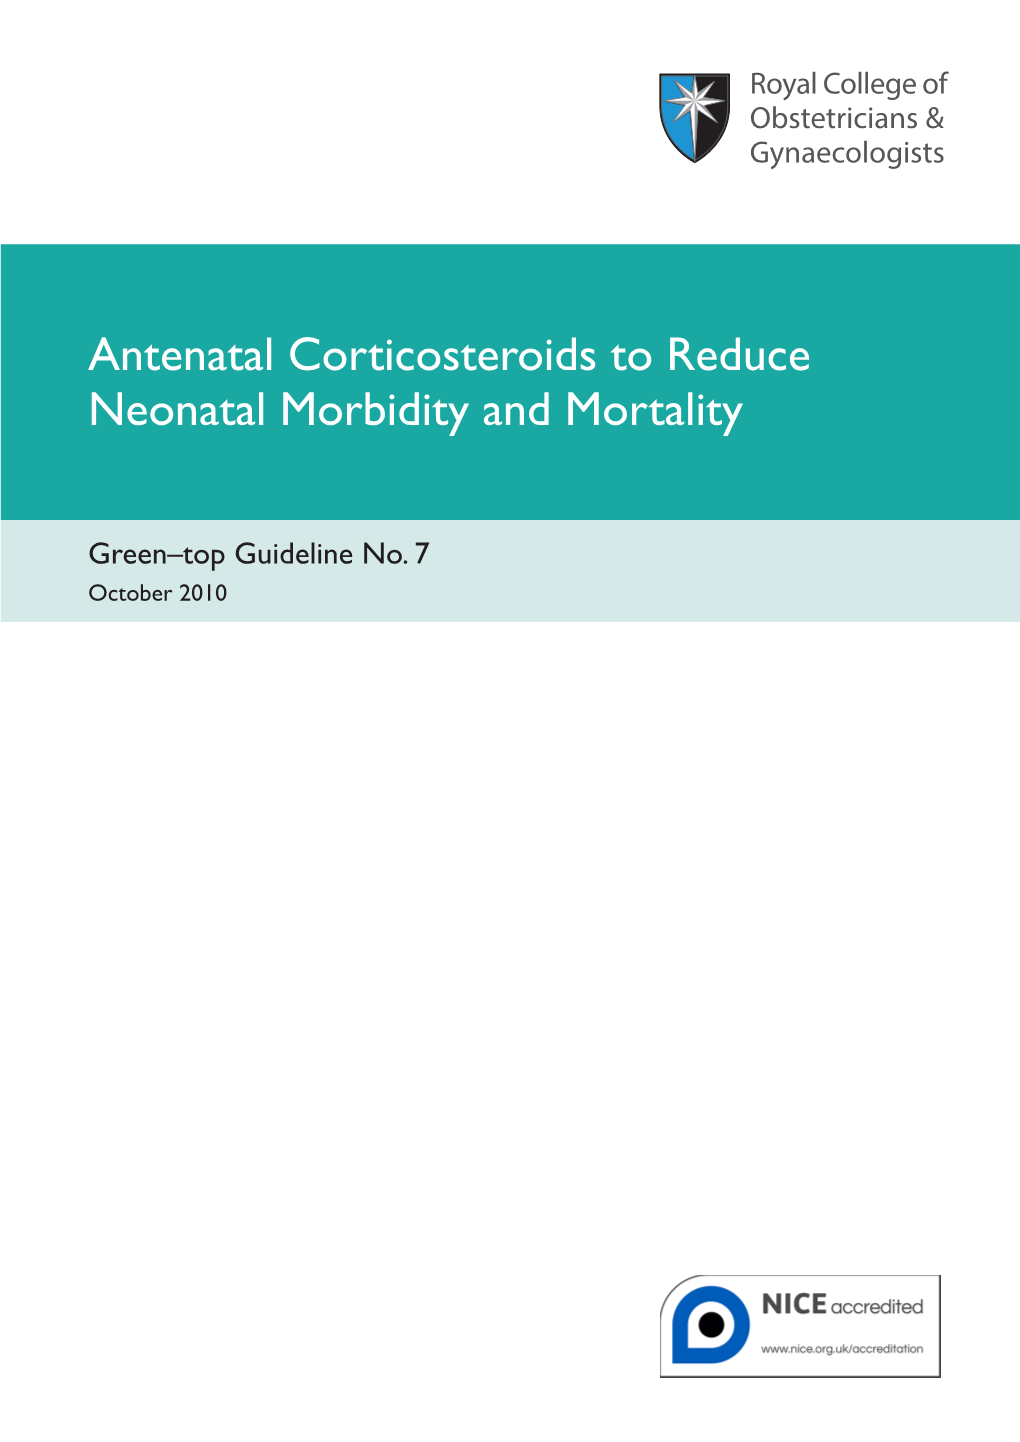 Antenatal Corticosteroids to Reduce Neonatal Morbidity and Mortality